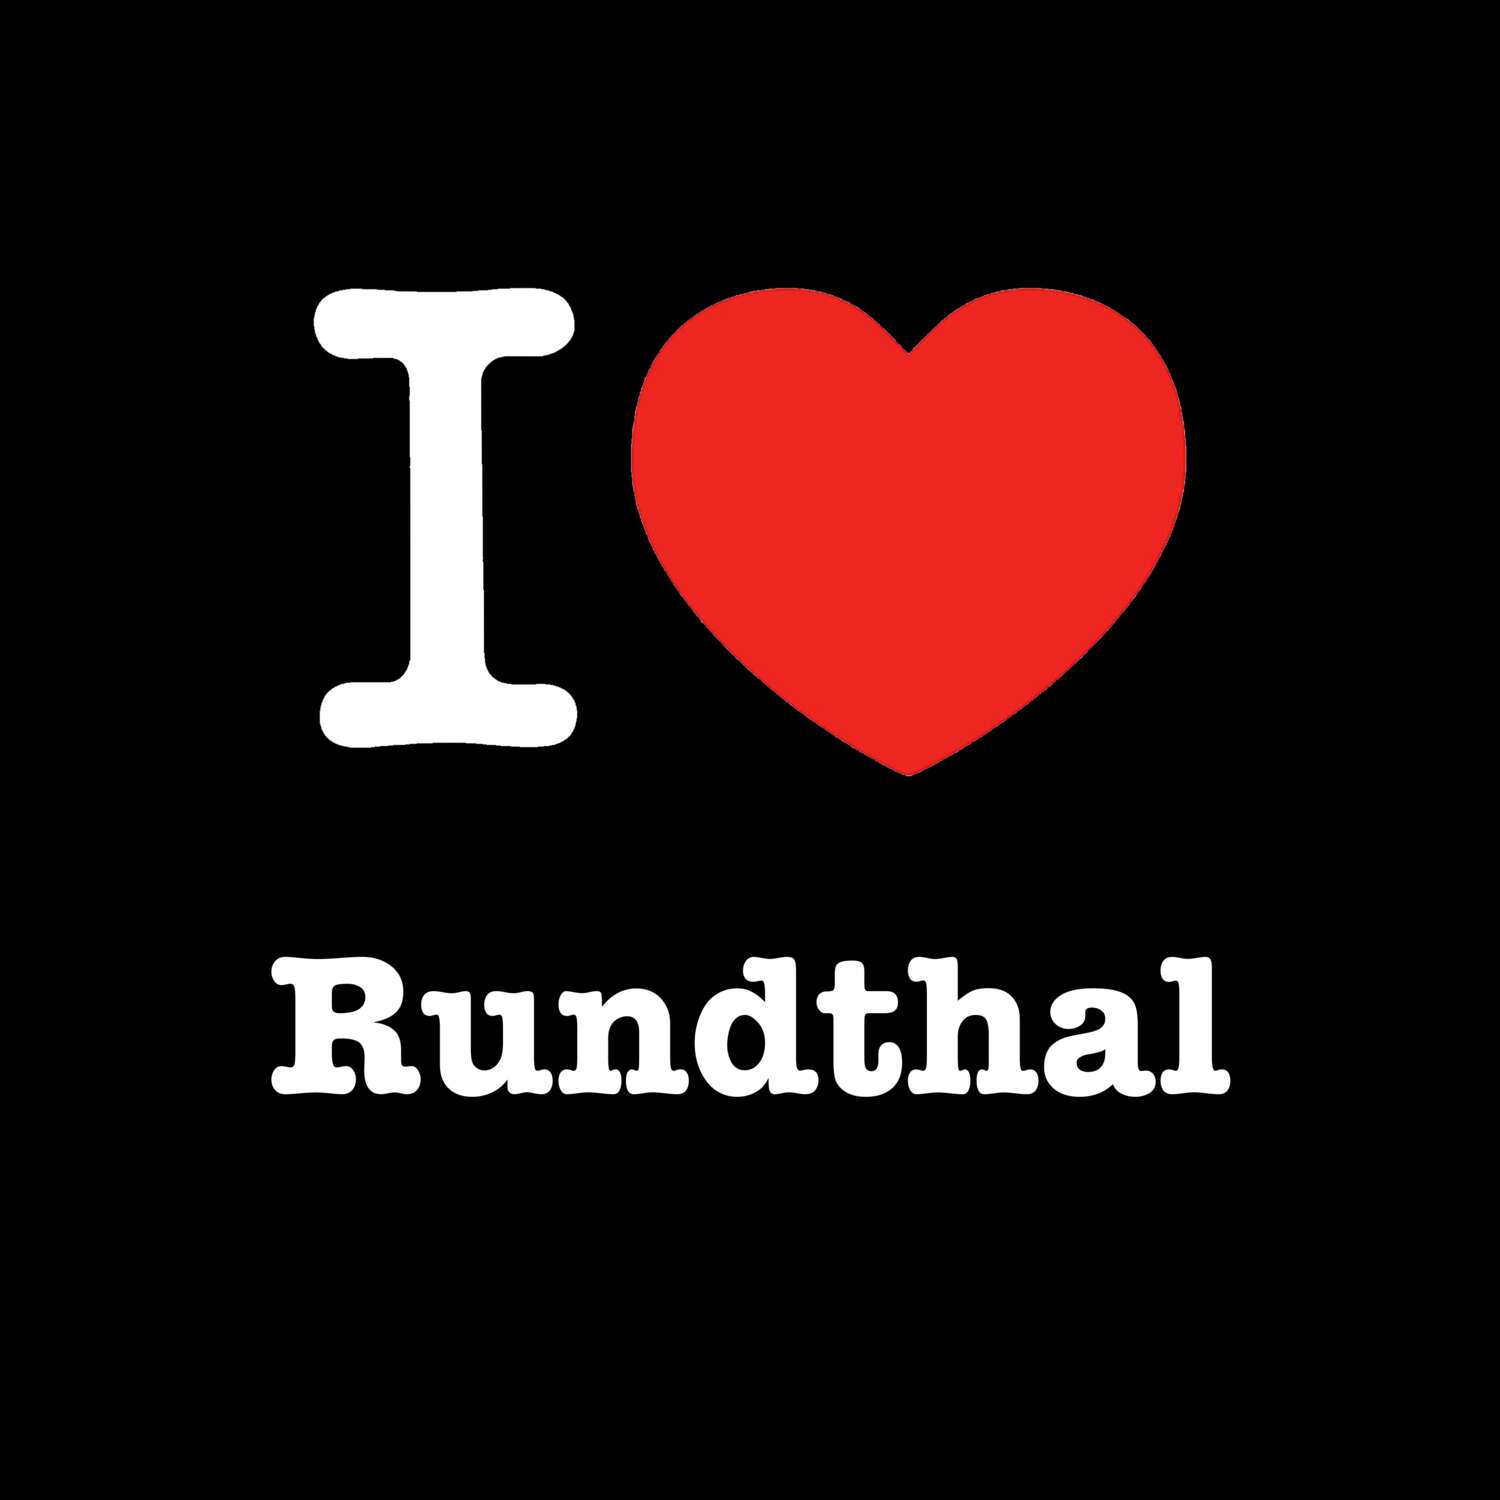 Rundthal T-Shirt »I love«